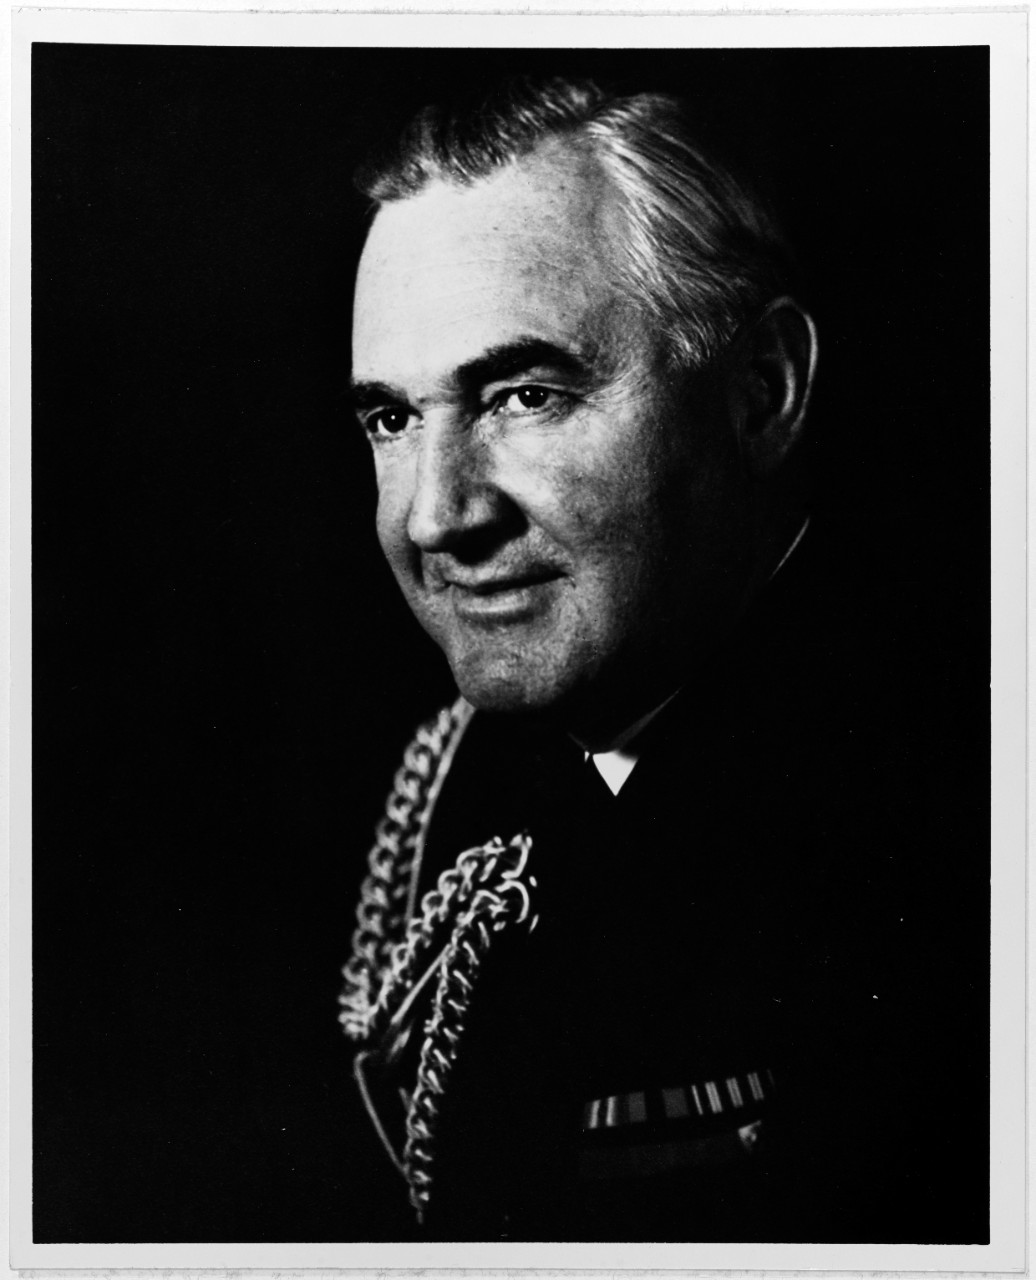 Captain John L. McCrea, USN